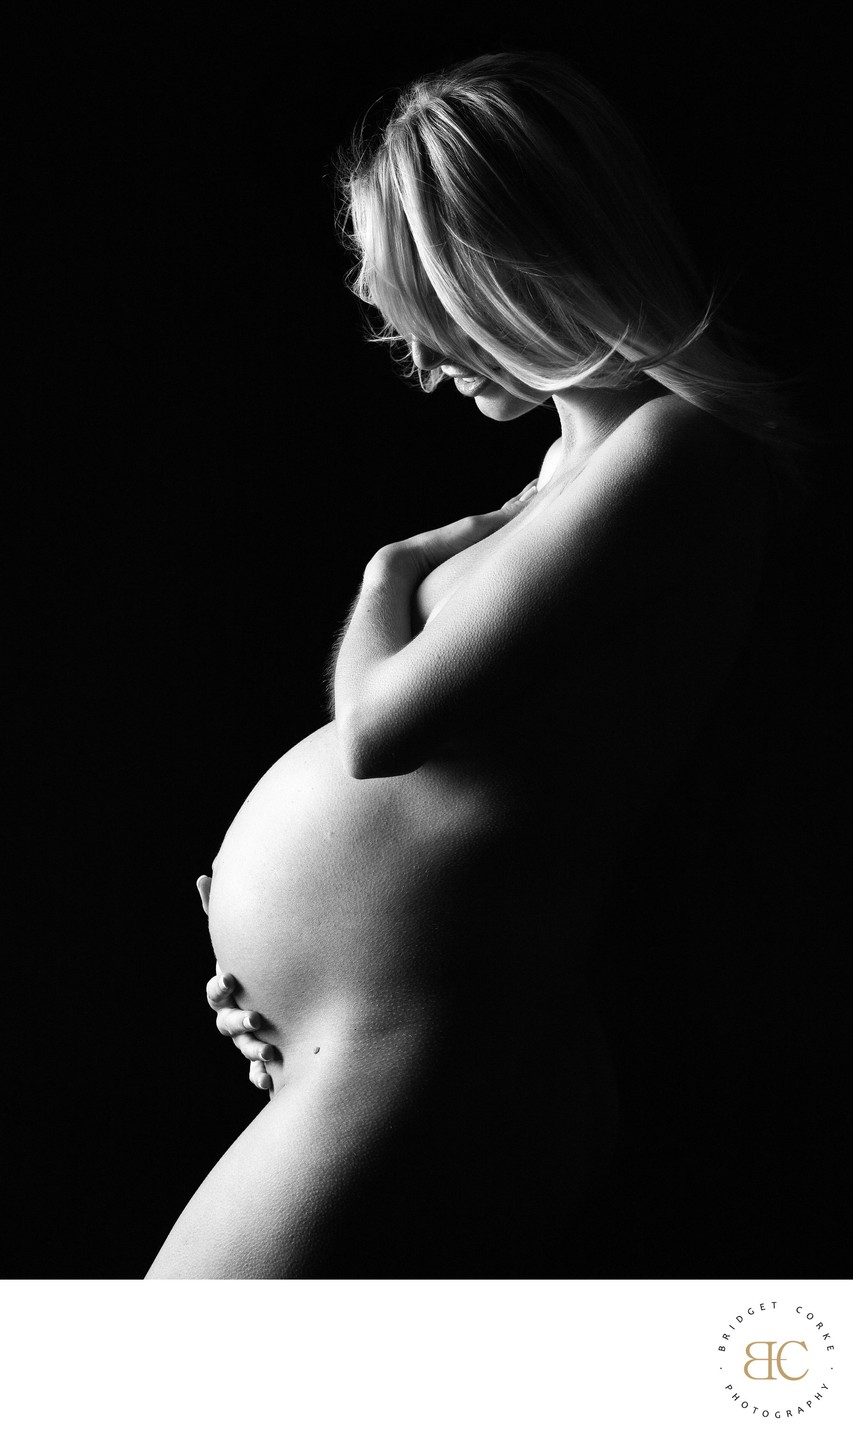 Artistic BW Pregnant Pose